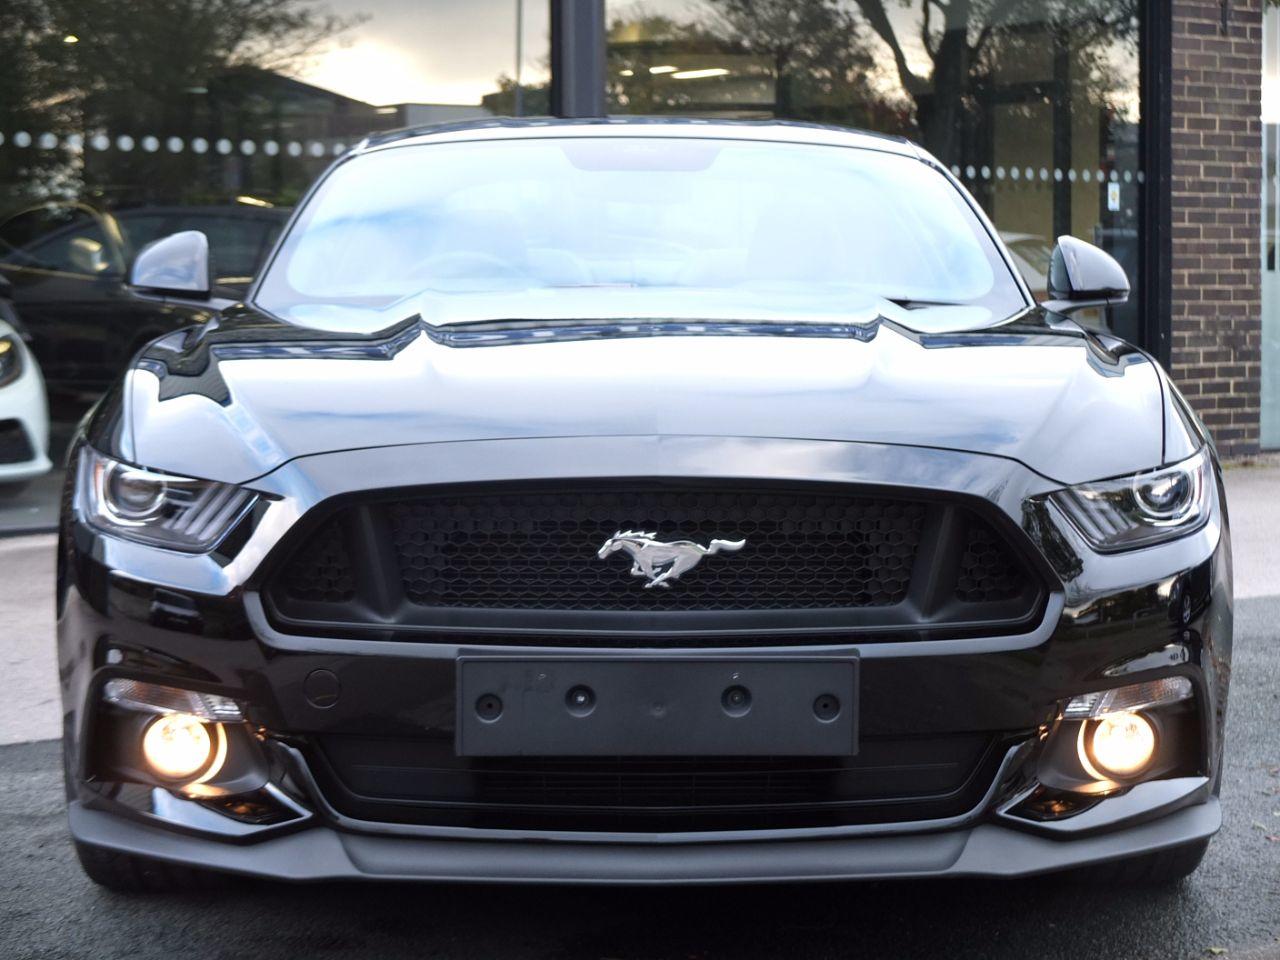 Ford Mustang 5.0 V8 GT Coupe Petrol Shadow Black Premium Metallic